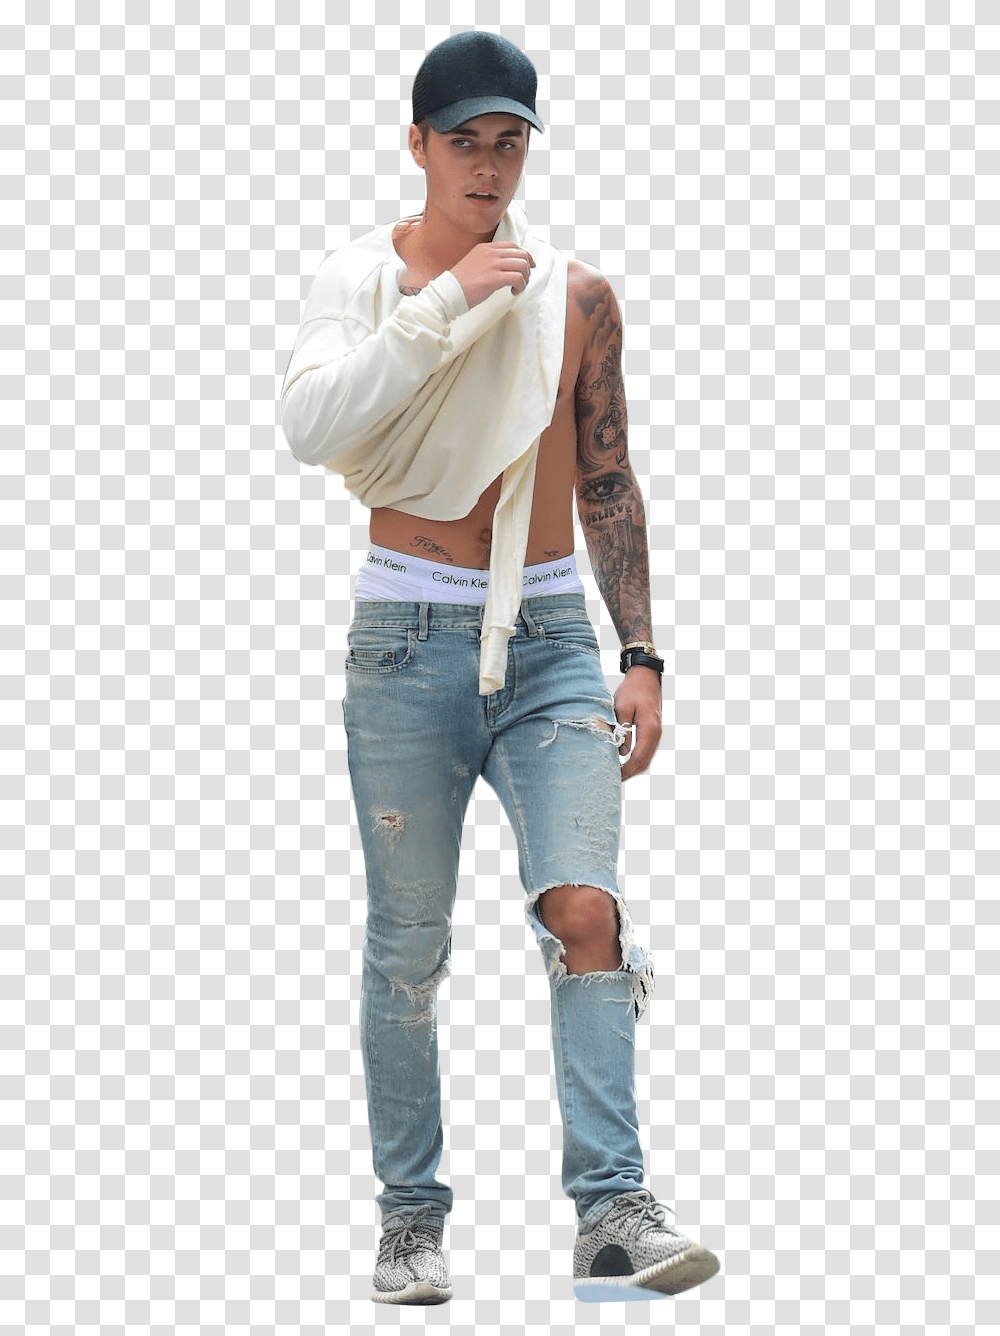 Justin Bieber Image, Skin, Pants, Apparel Transparent Png